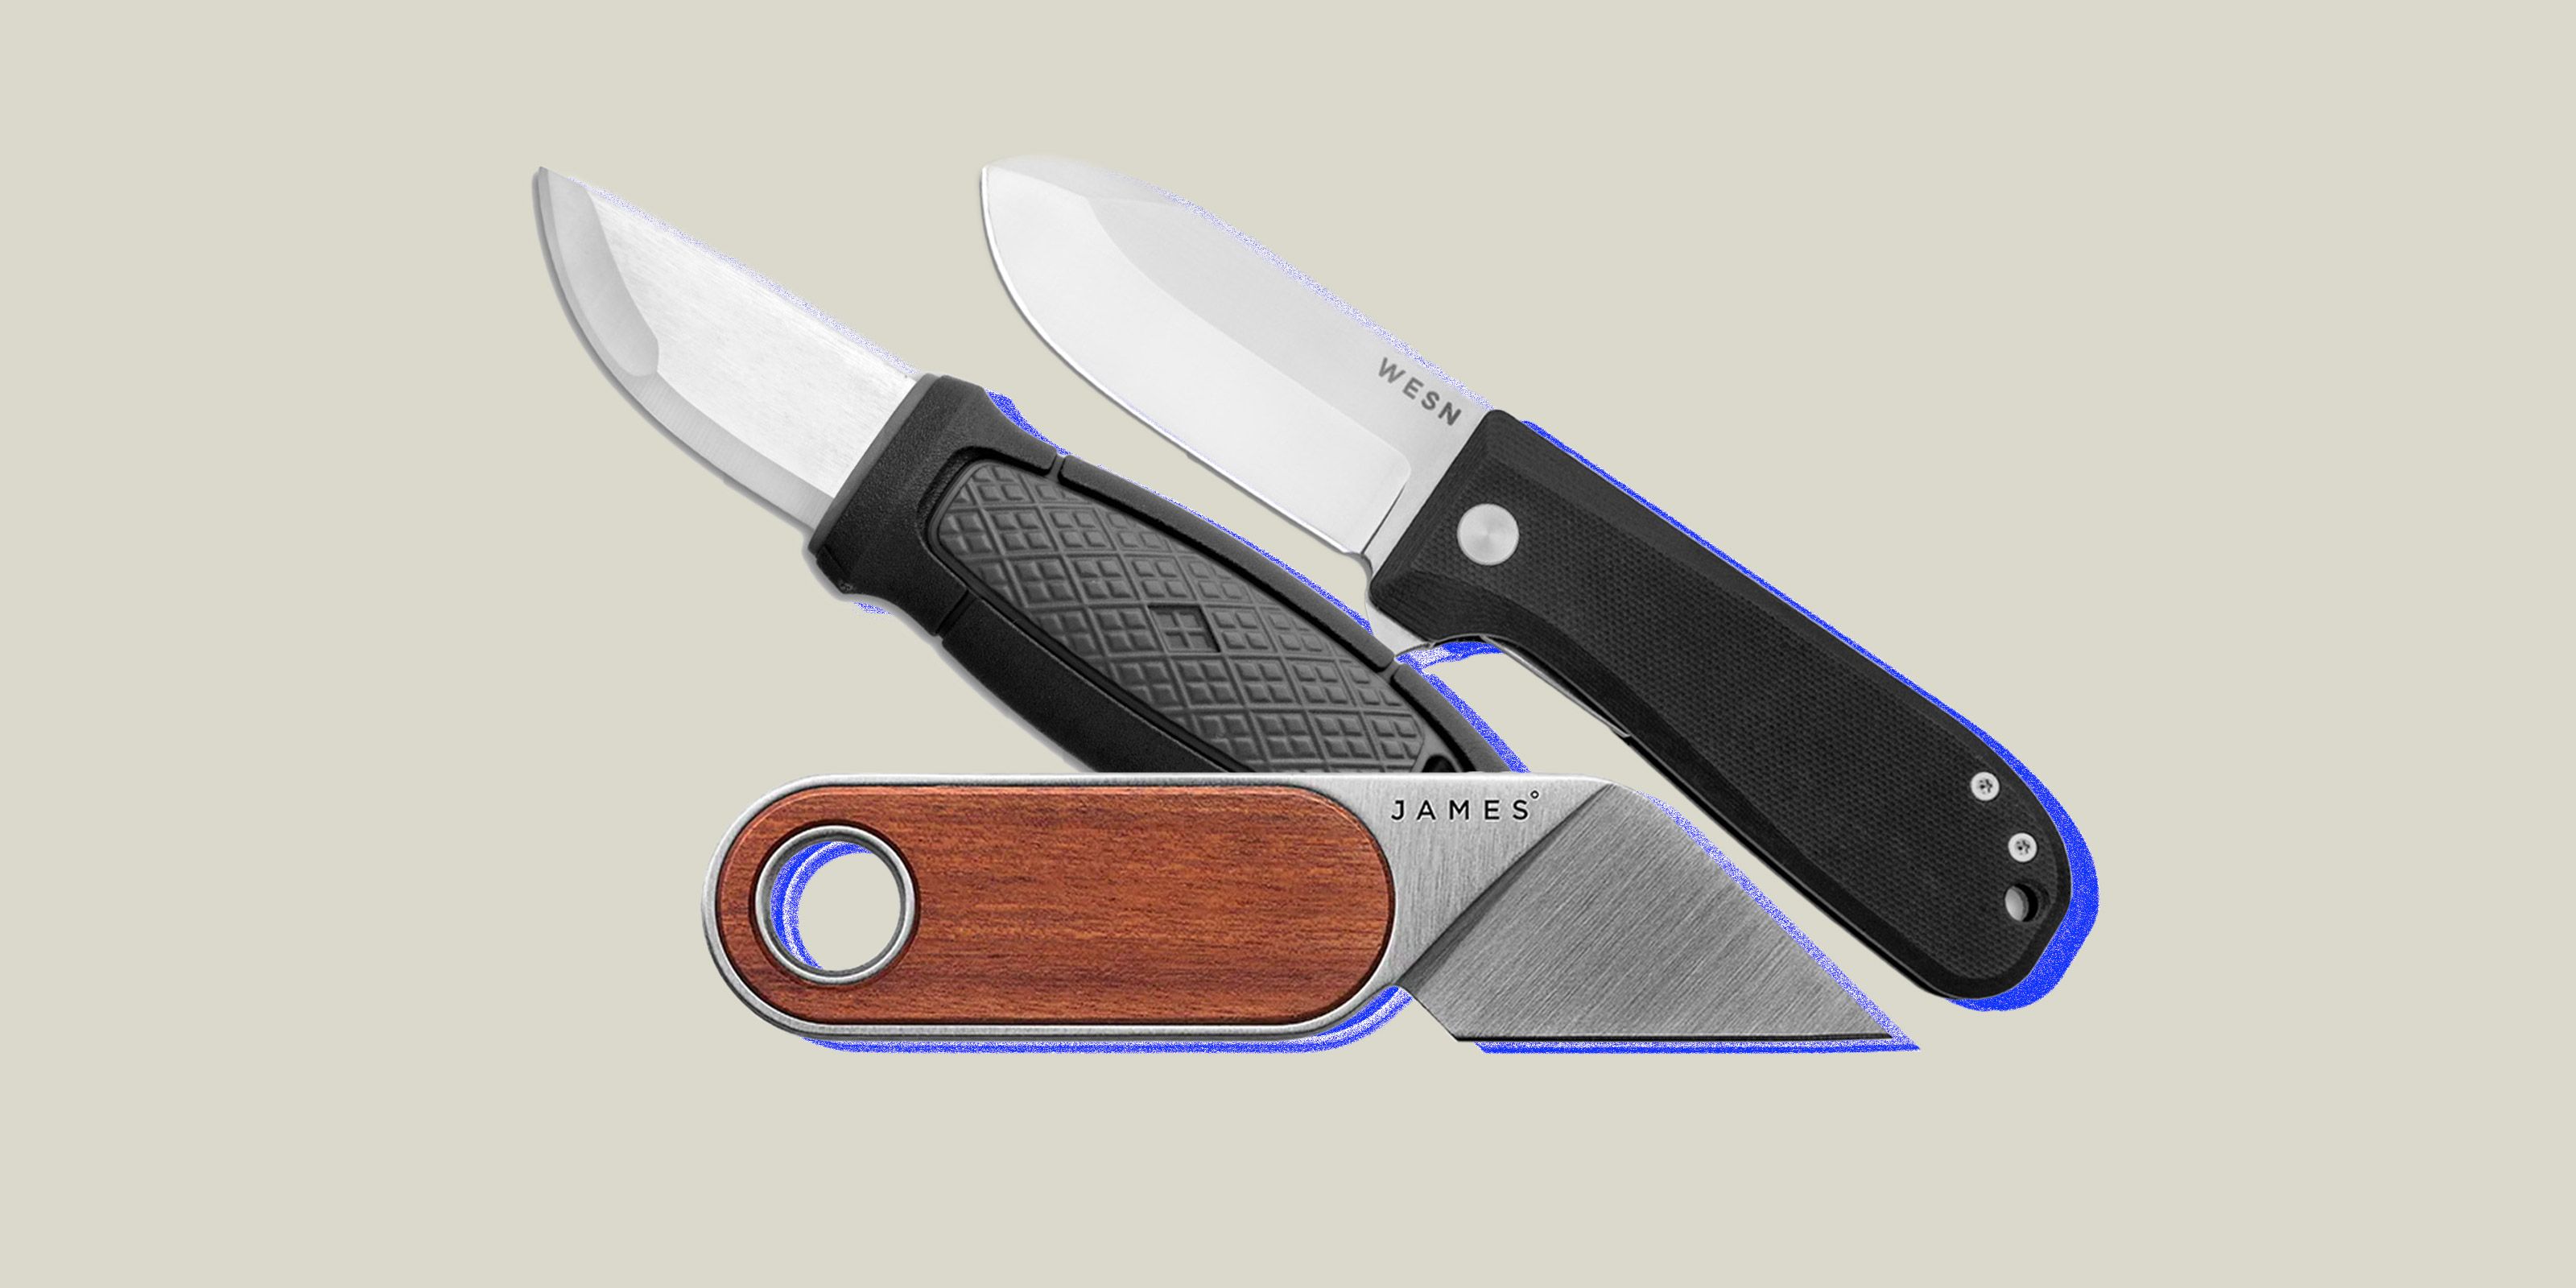 The Best Mini Pocket Knives